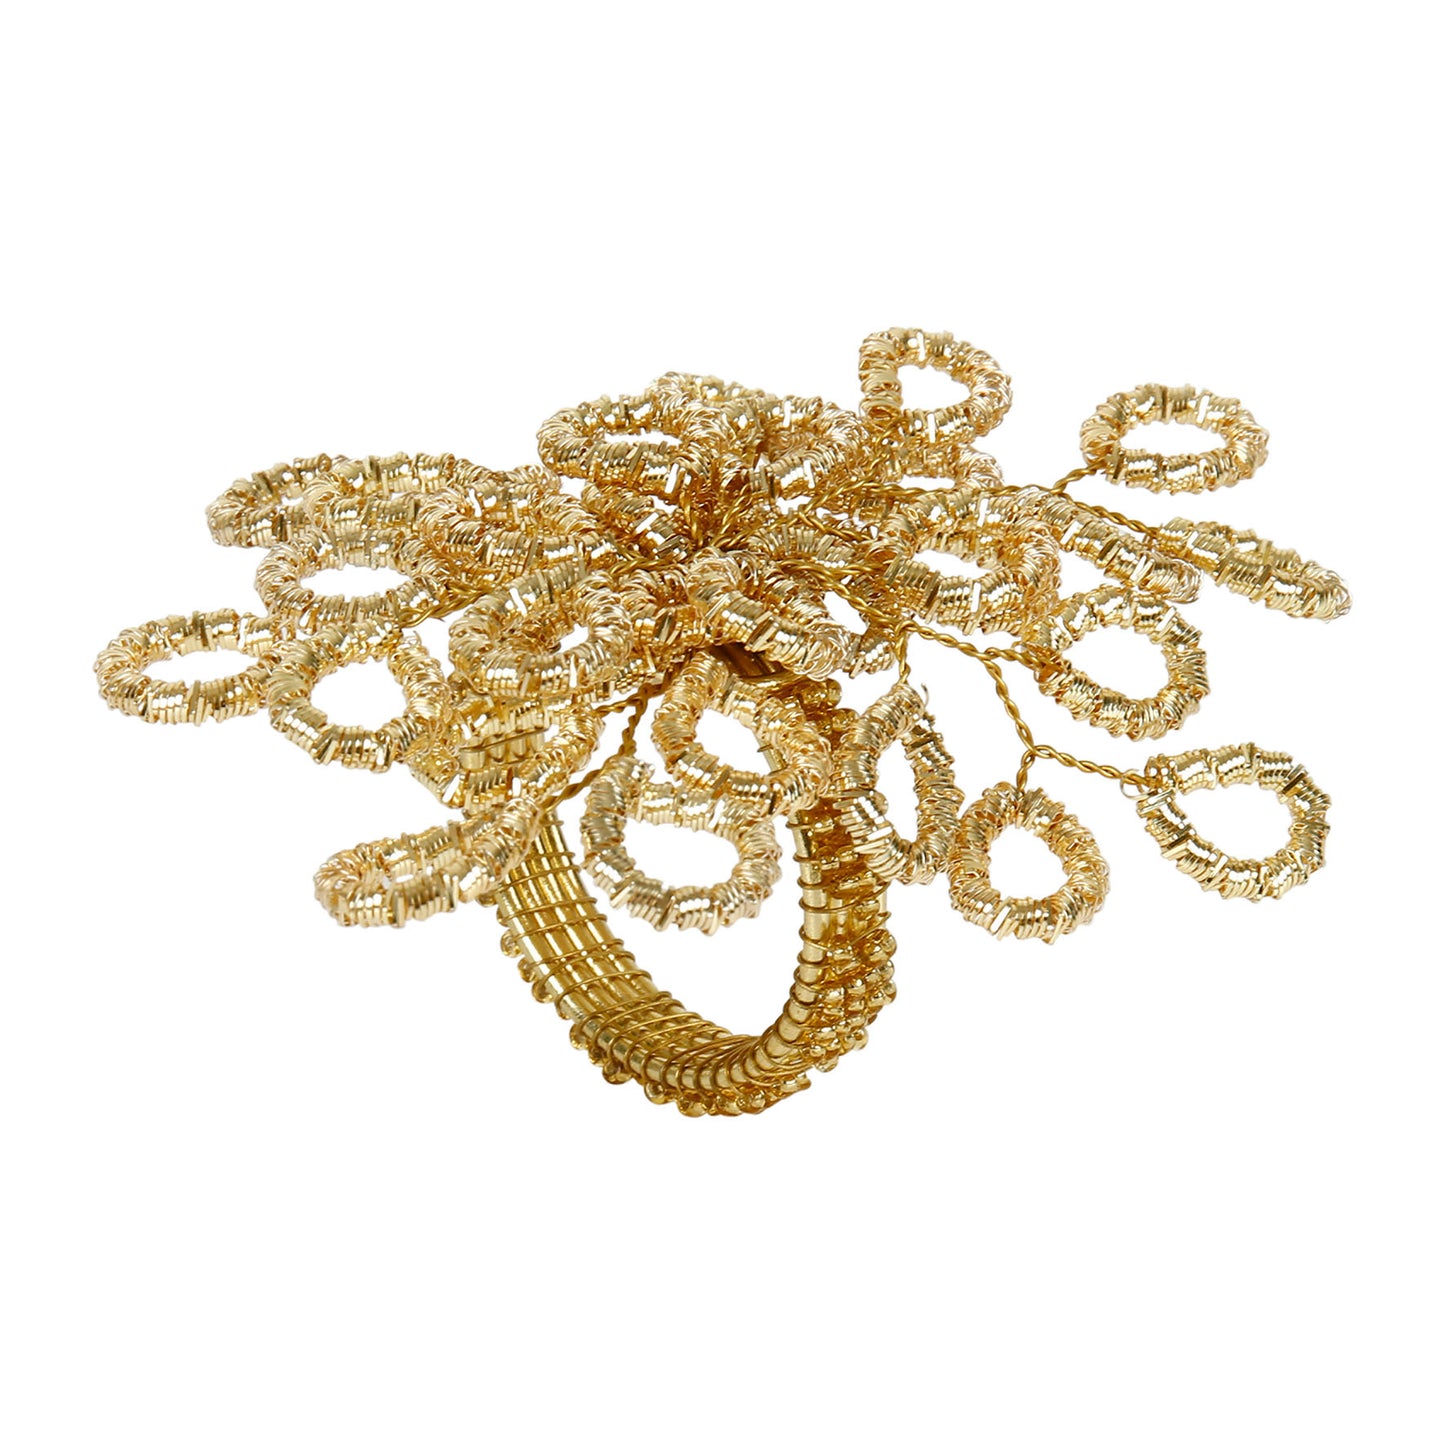 Embellished gold napkin ring